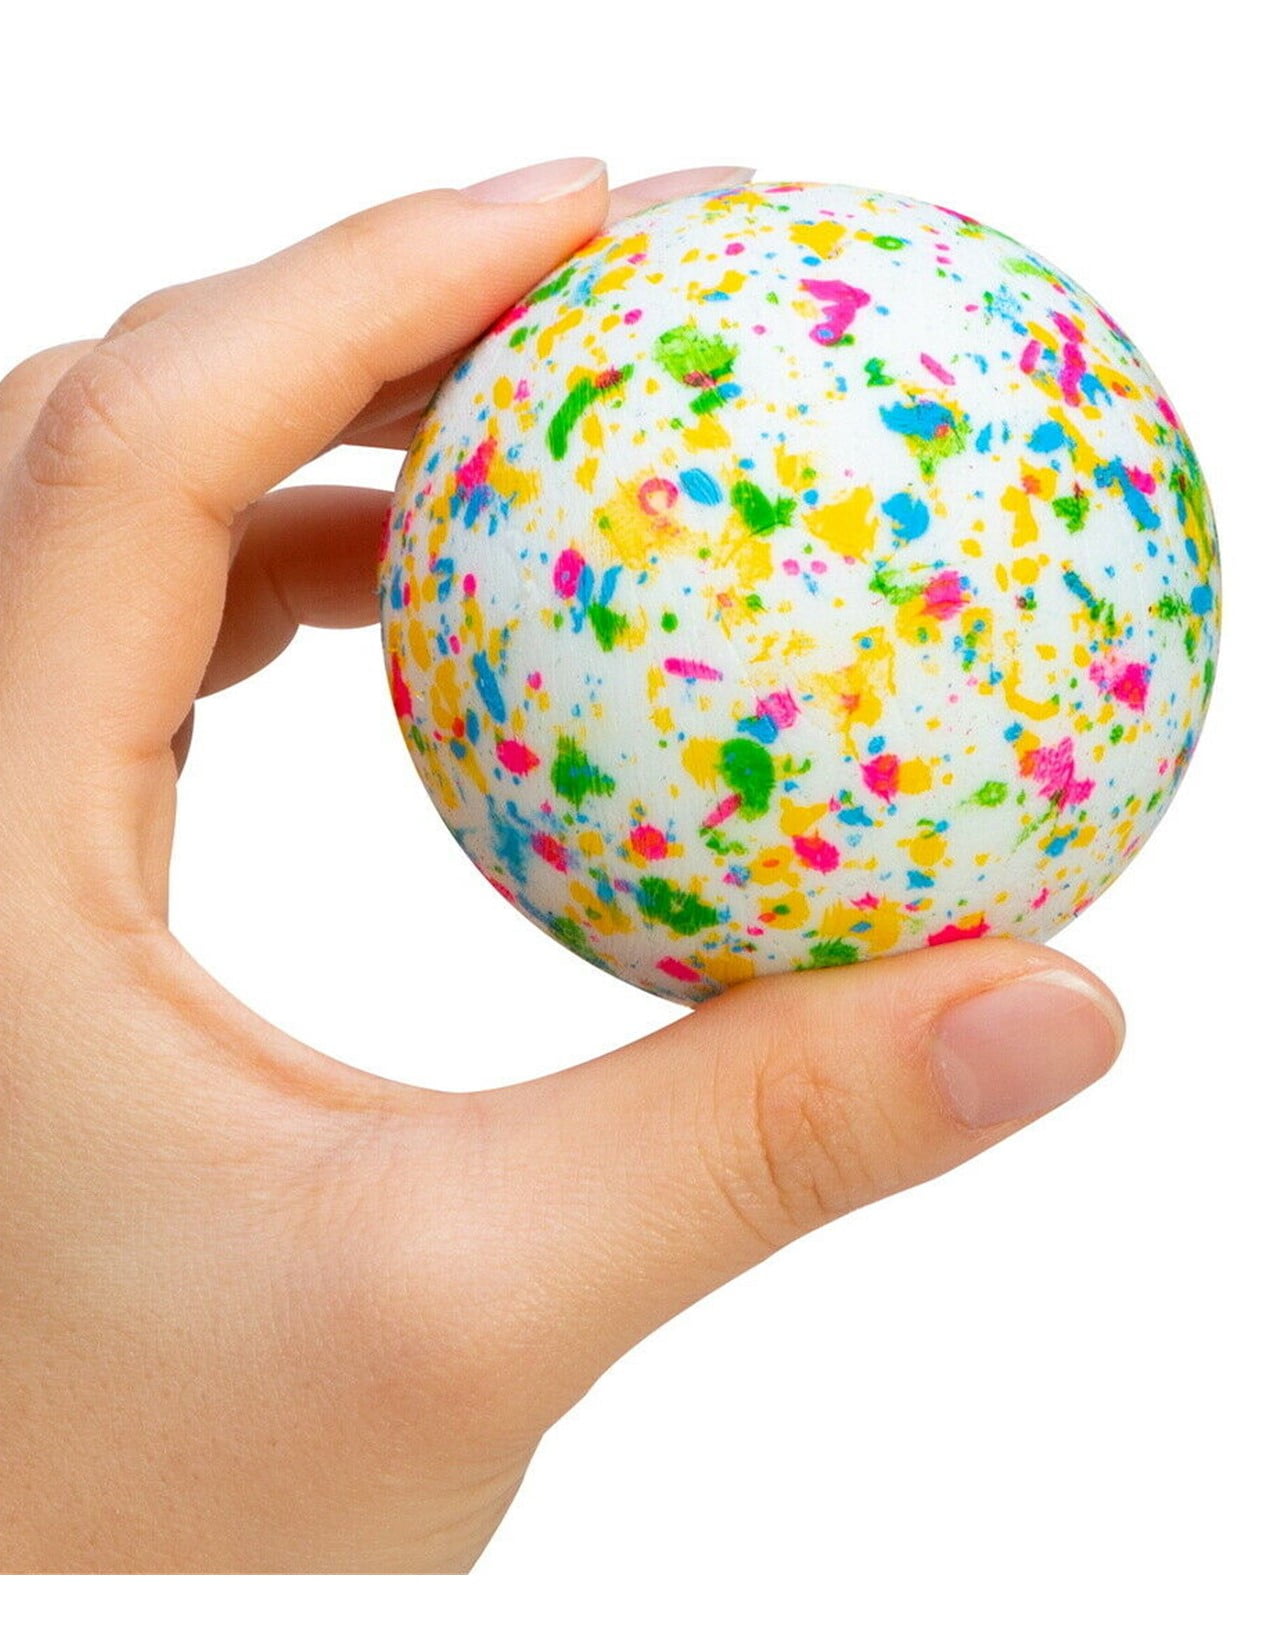 Tobar Jumbo Sensory Shimmery Squish Ball Stress Relief ADHD Autism Blue NEW 